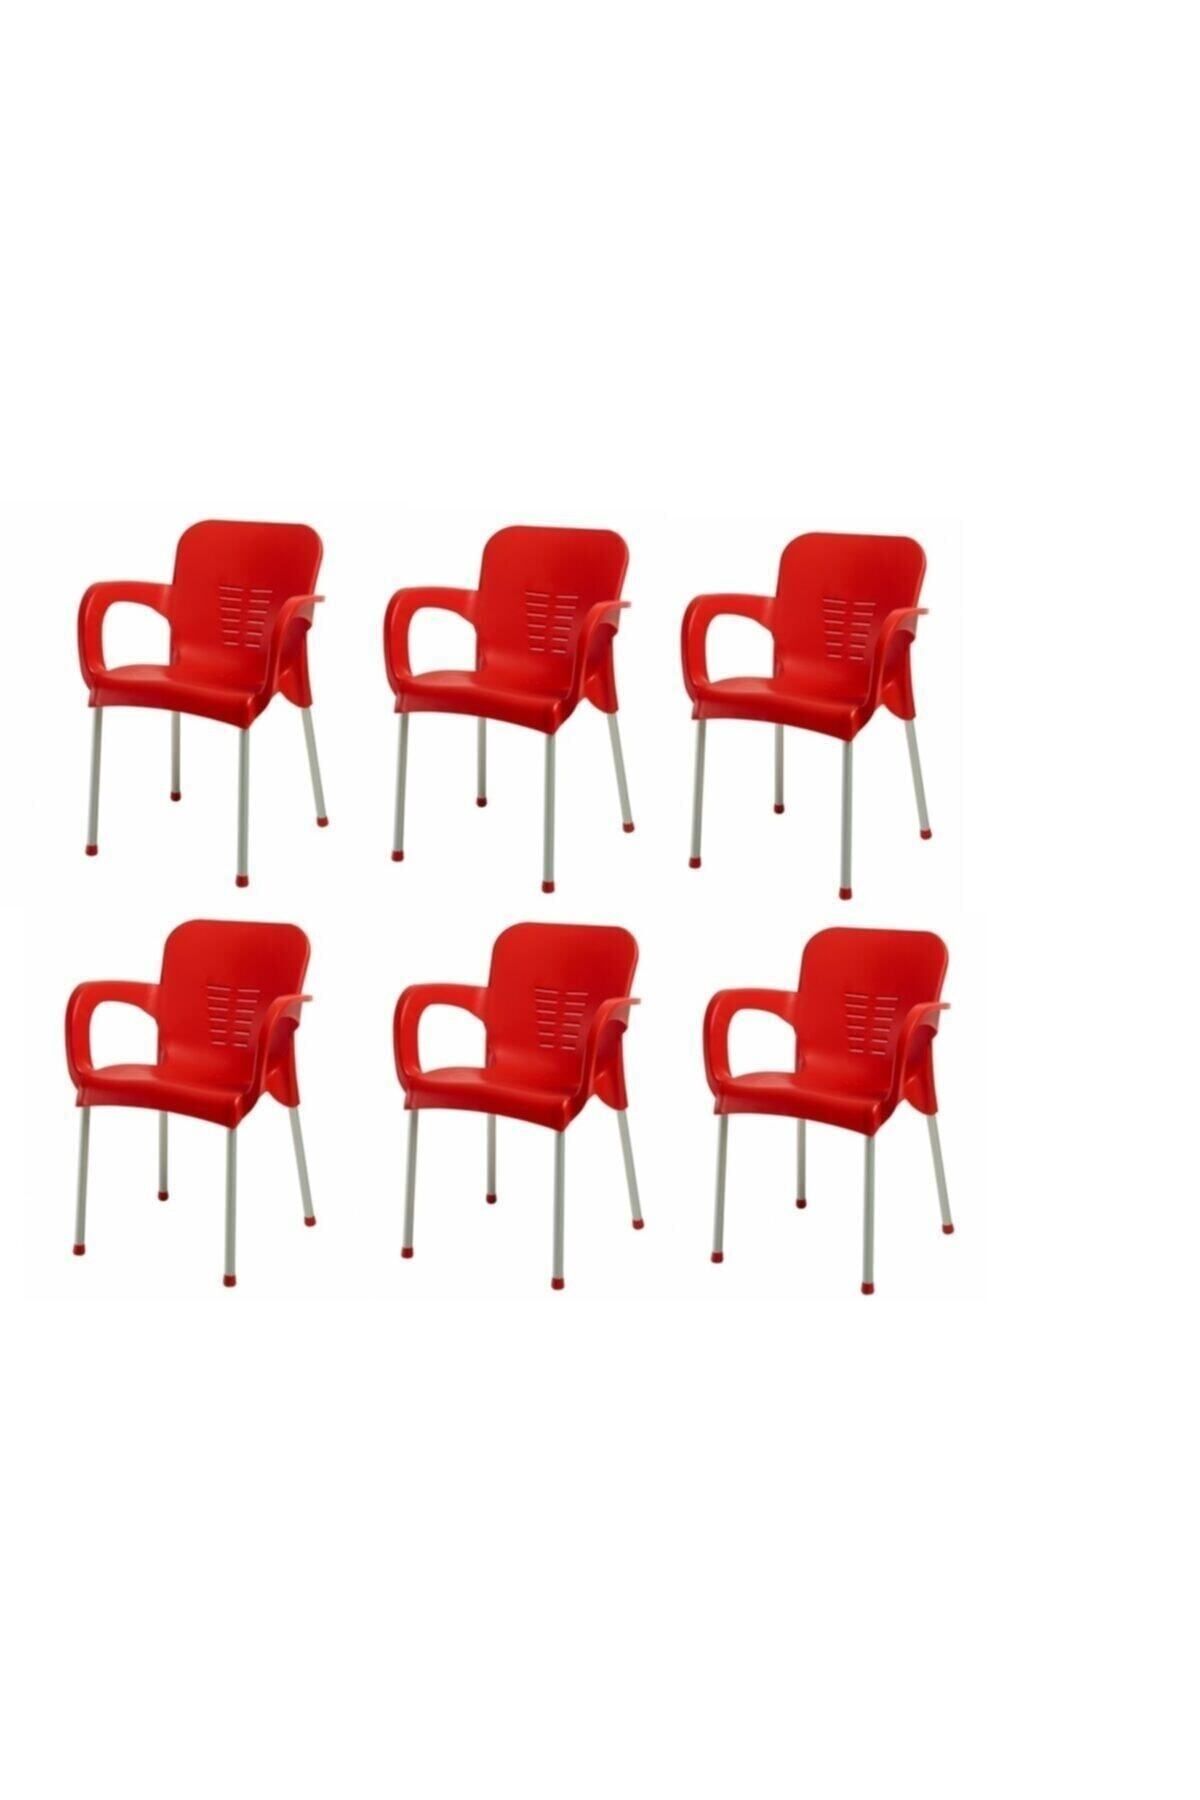 NetBazaars Kırmızı Plastik Sandalye 6 Adet Xömbx98